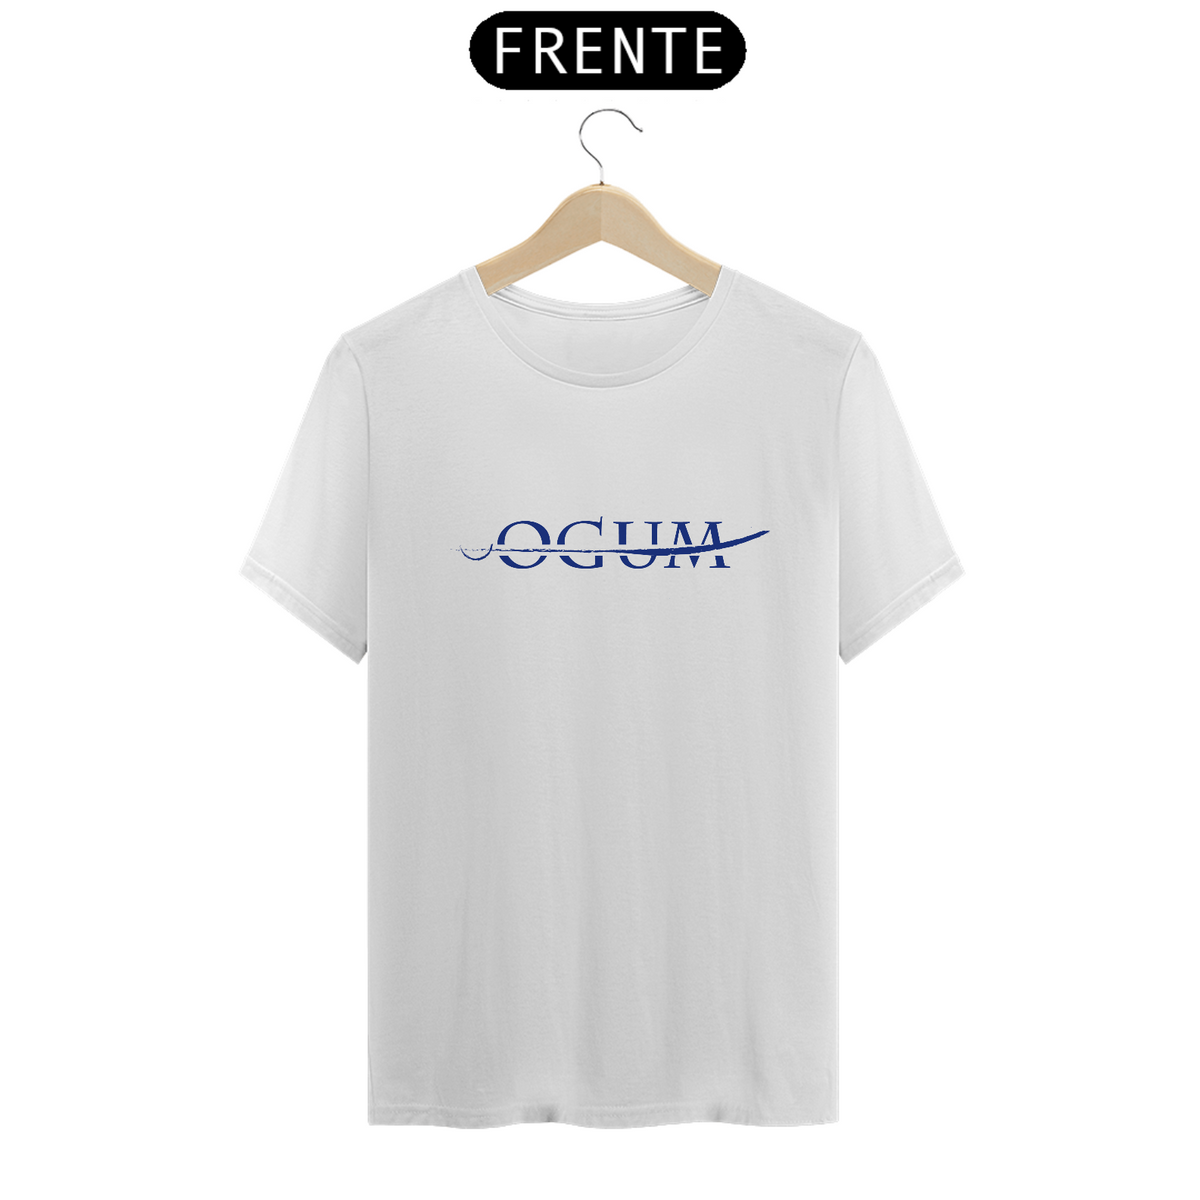 Nome do produto: T-Shirt Classic Branca - Okan Ogun